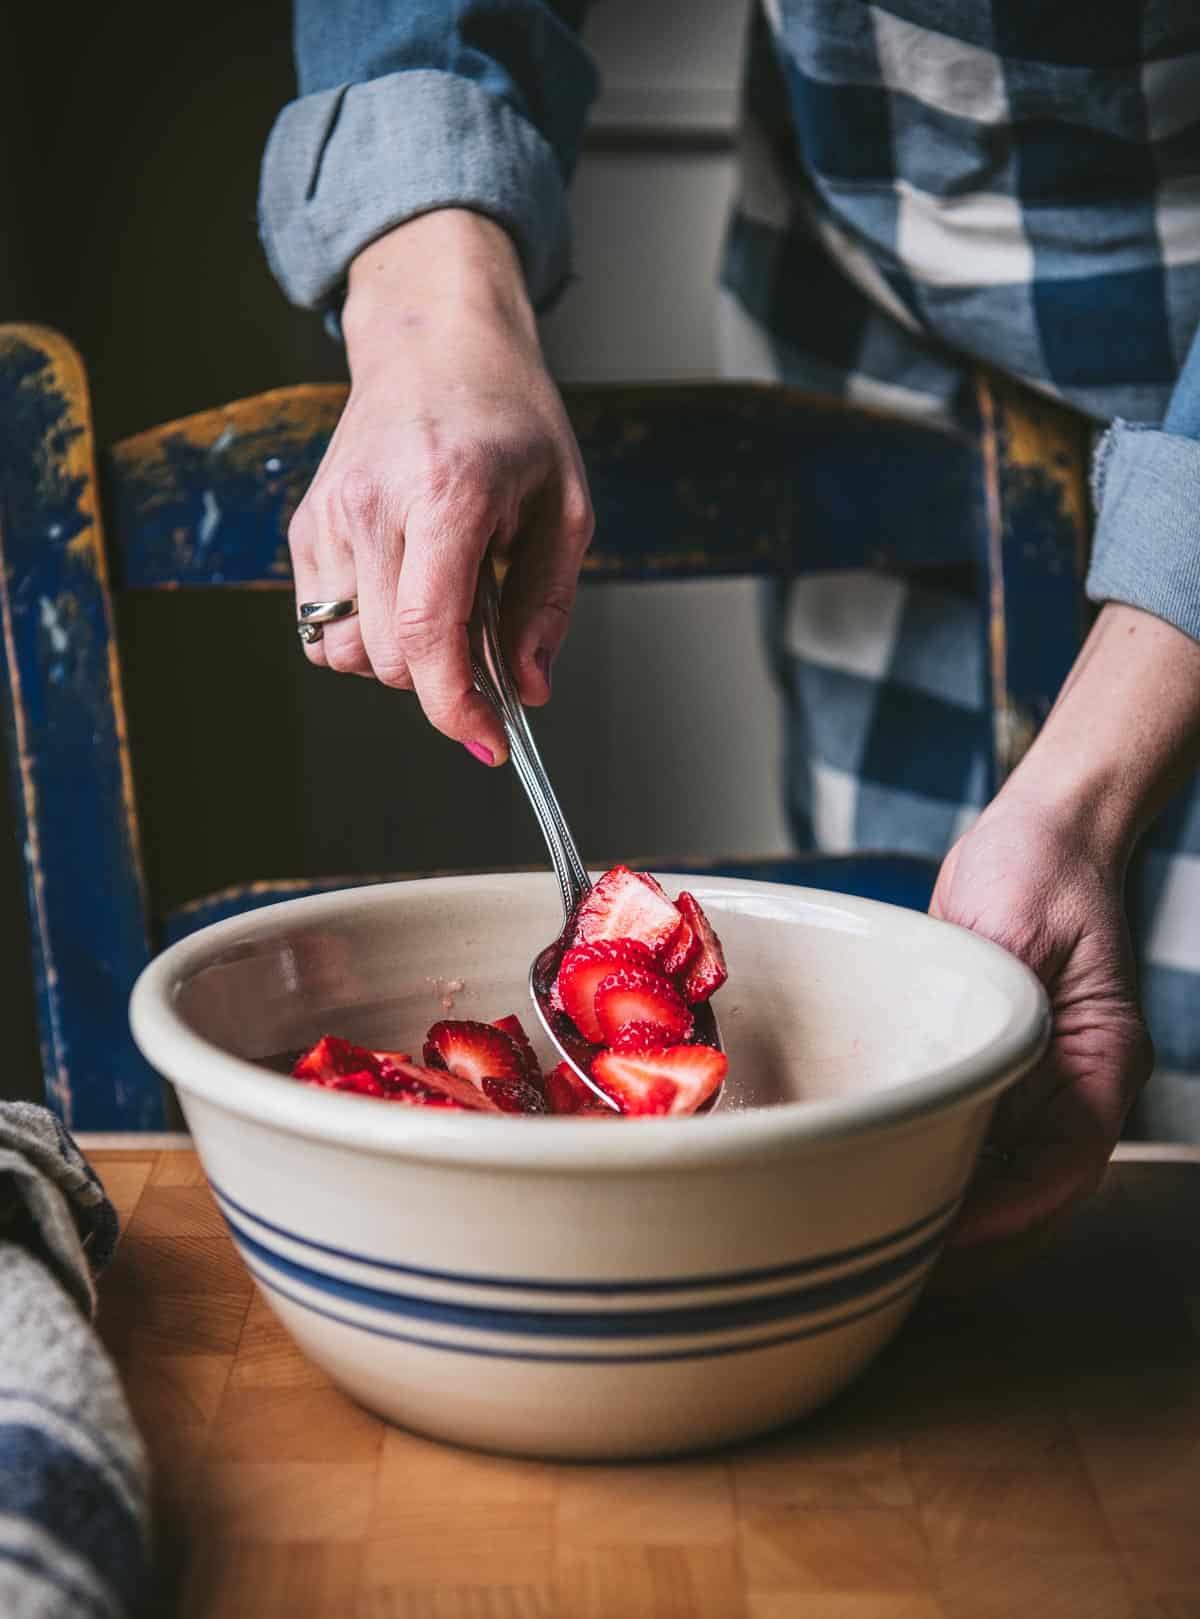 Stirring together sliced strawberries for shortcake recipe.